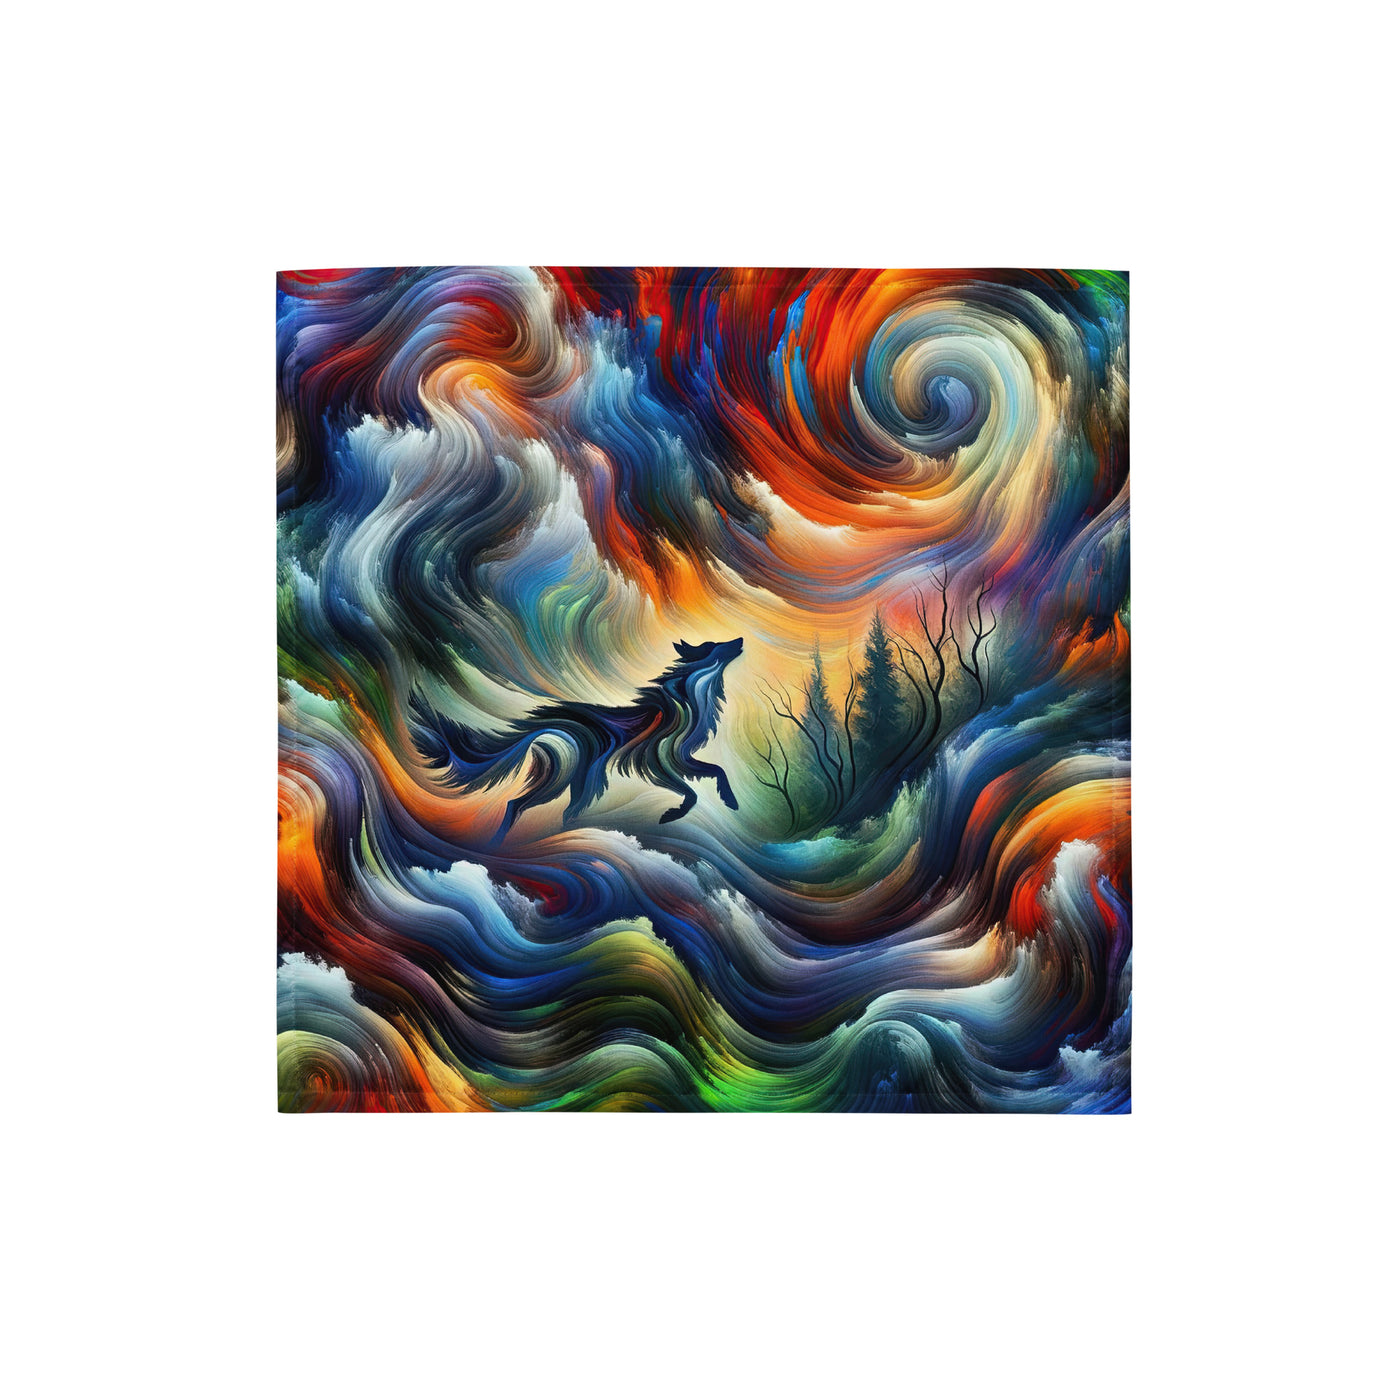 Alpen Abstraktgemälde mit Wolf Silhouette in lebhaften Farben (AN) - Bandana (All-Over Print) xxx yyy zzz S